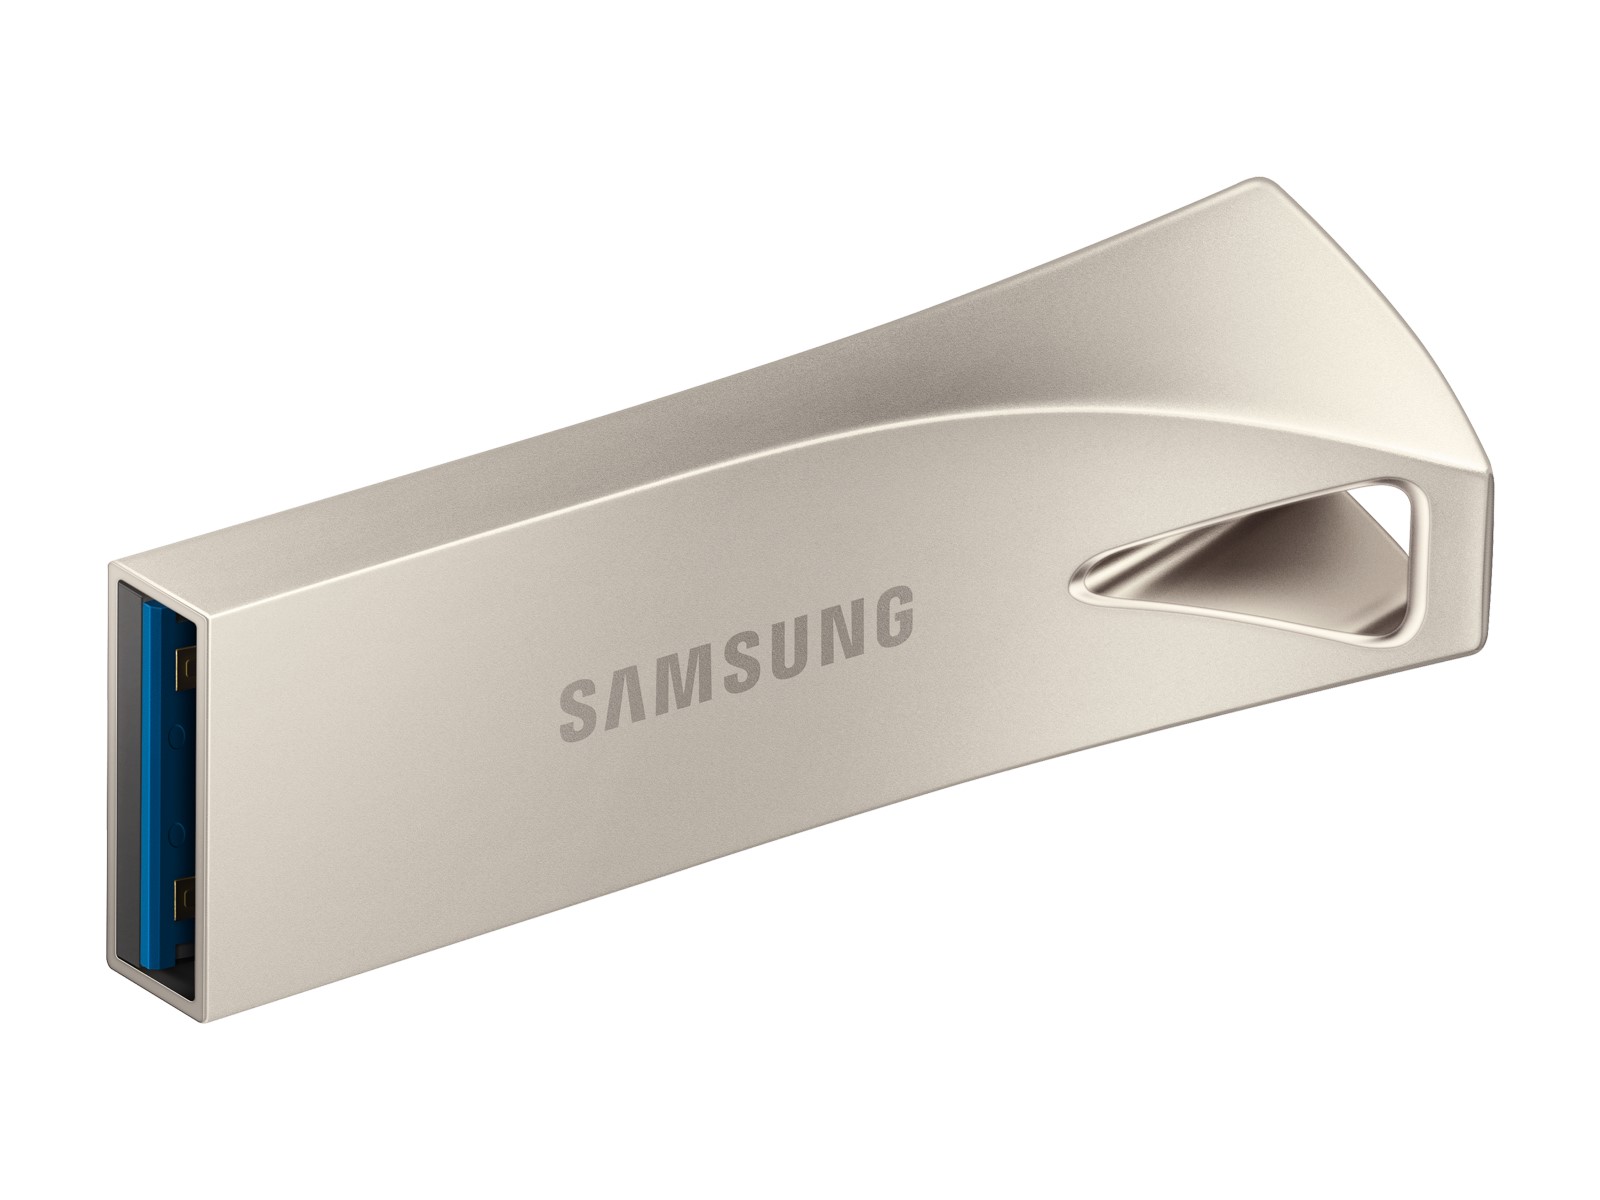 Thumbnail image of BAR Plus USB 3.1 Flash Drive 256GB Champagne Silver